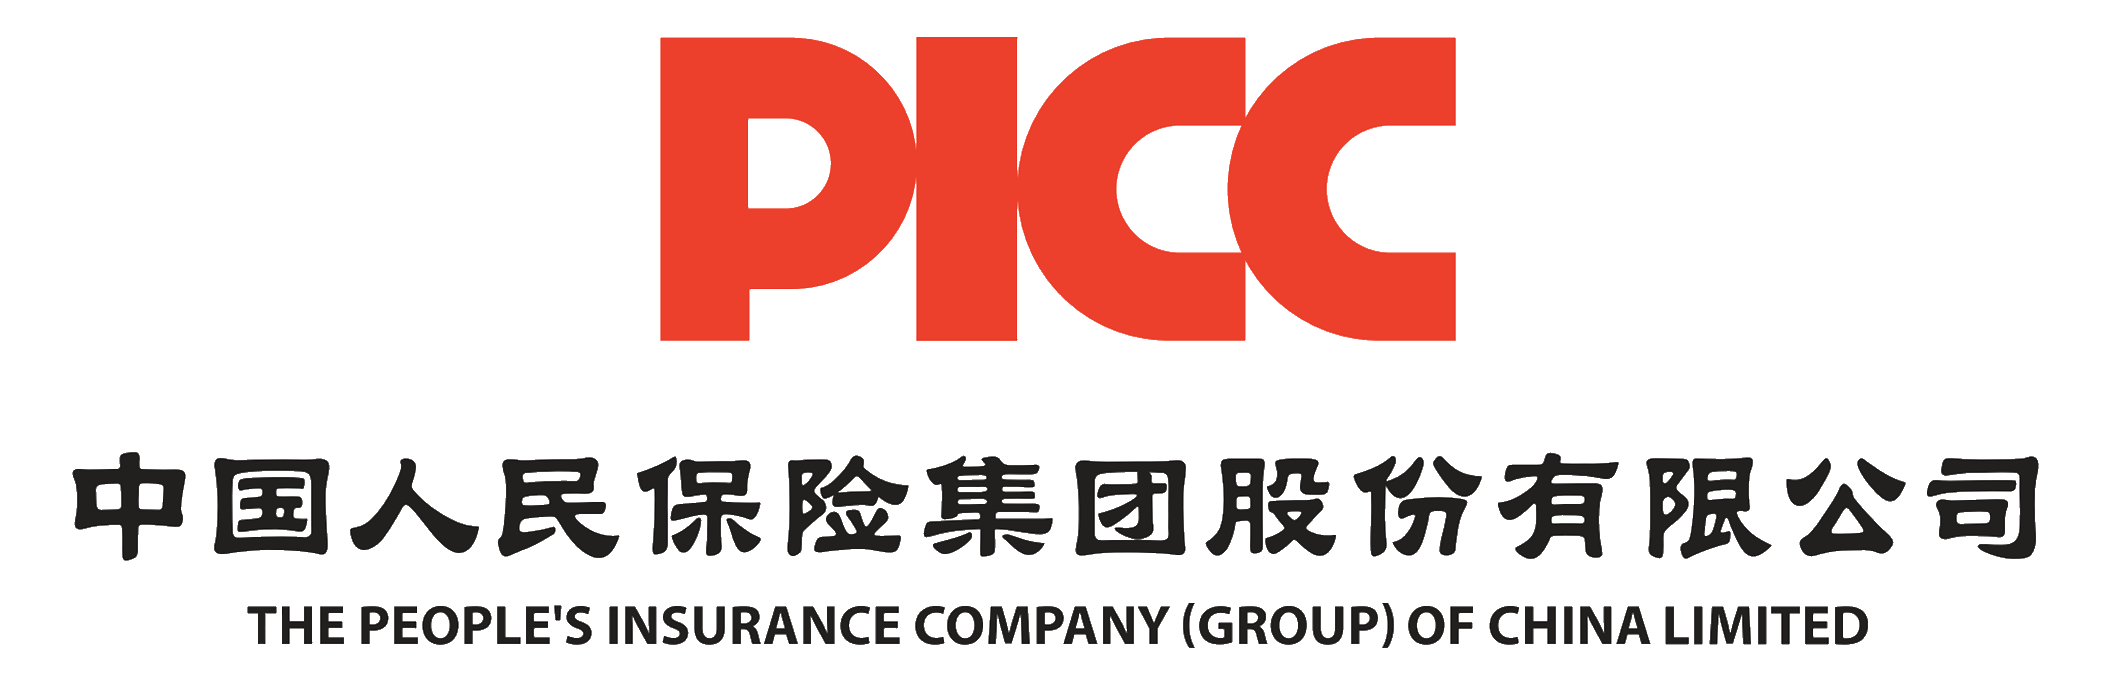 Chinese Phone Company Logo - File:People's Insurance Company of China logo 2.png - Wikimedia Commons